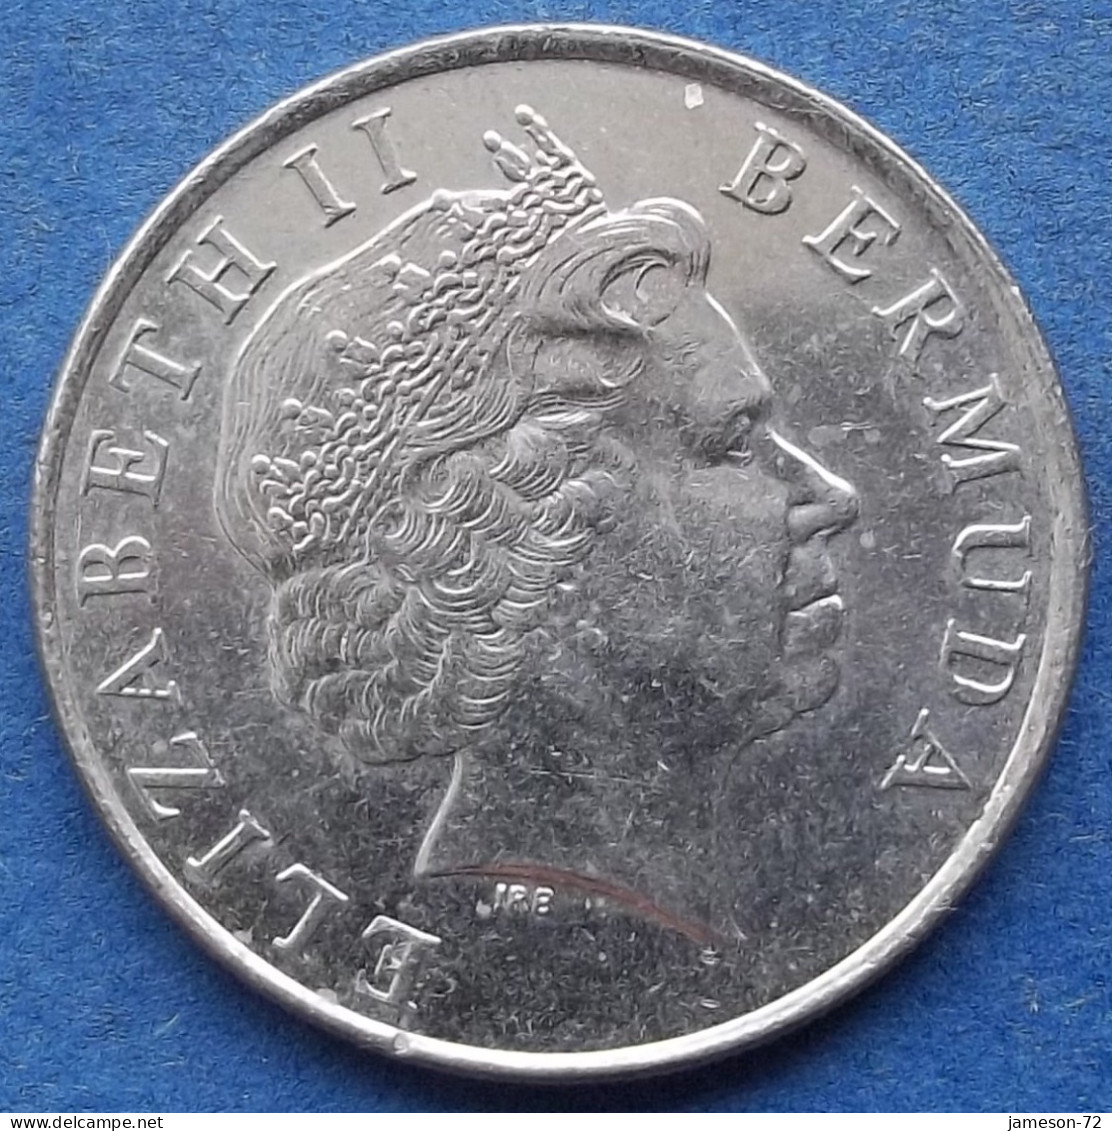 BERMUDA - 25 Cents 2005 "Yellow-billed Tropical Bird" KM# 110 Elizabeth II Decimal Coinage (1970-2022) - Edelweiss Coins - Bermudas